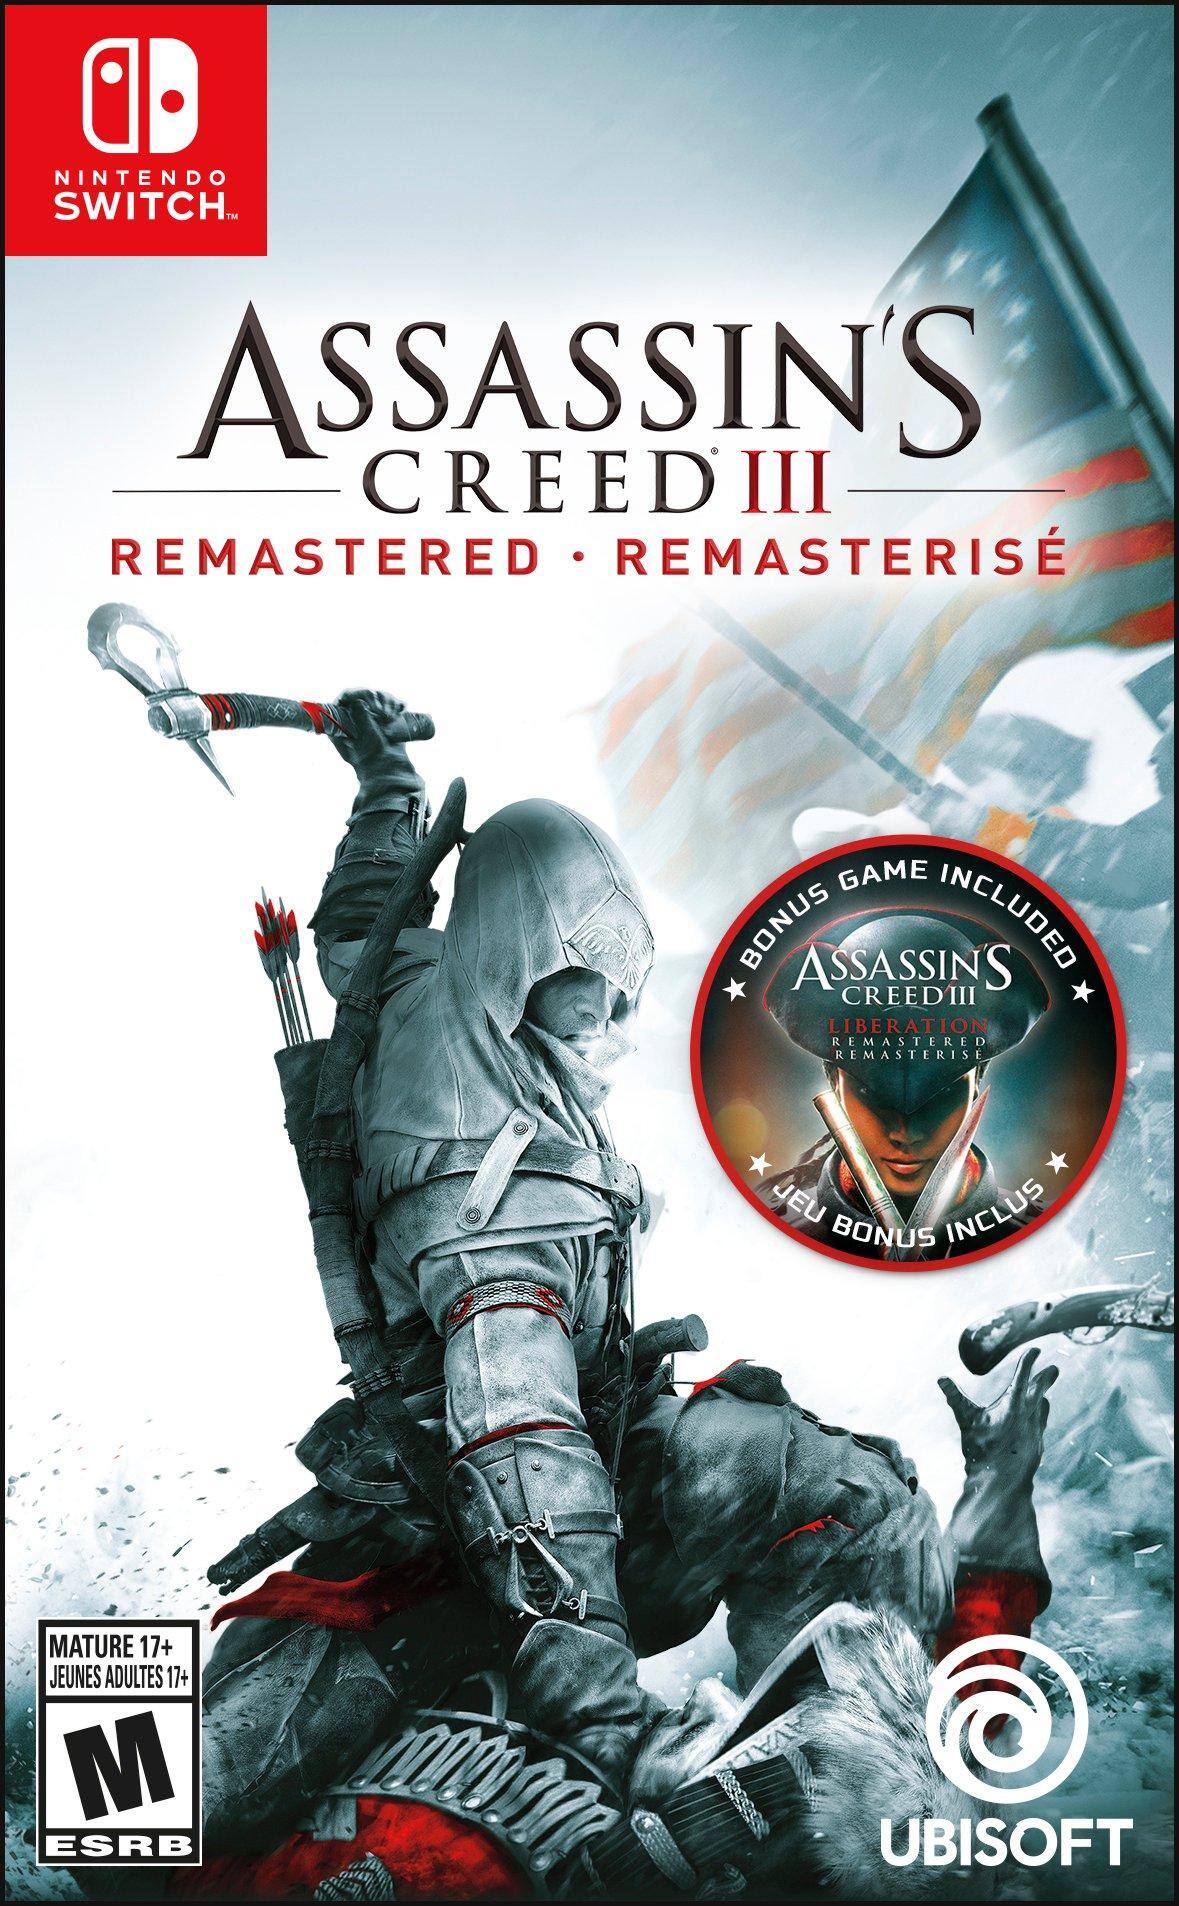 Assassin's Creed III Remastered (Nintendo Switch) $17.93 @ GameStop